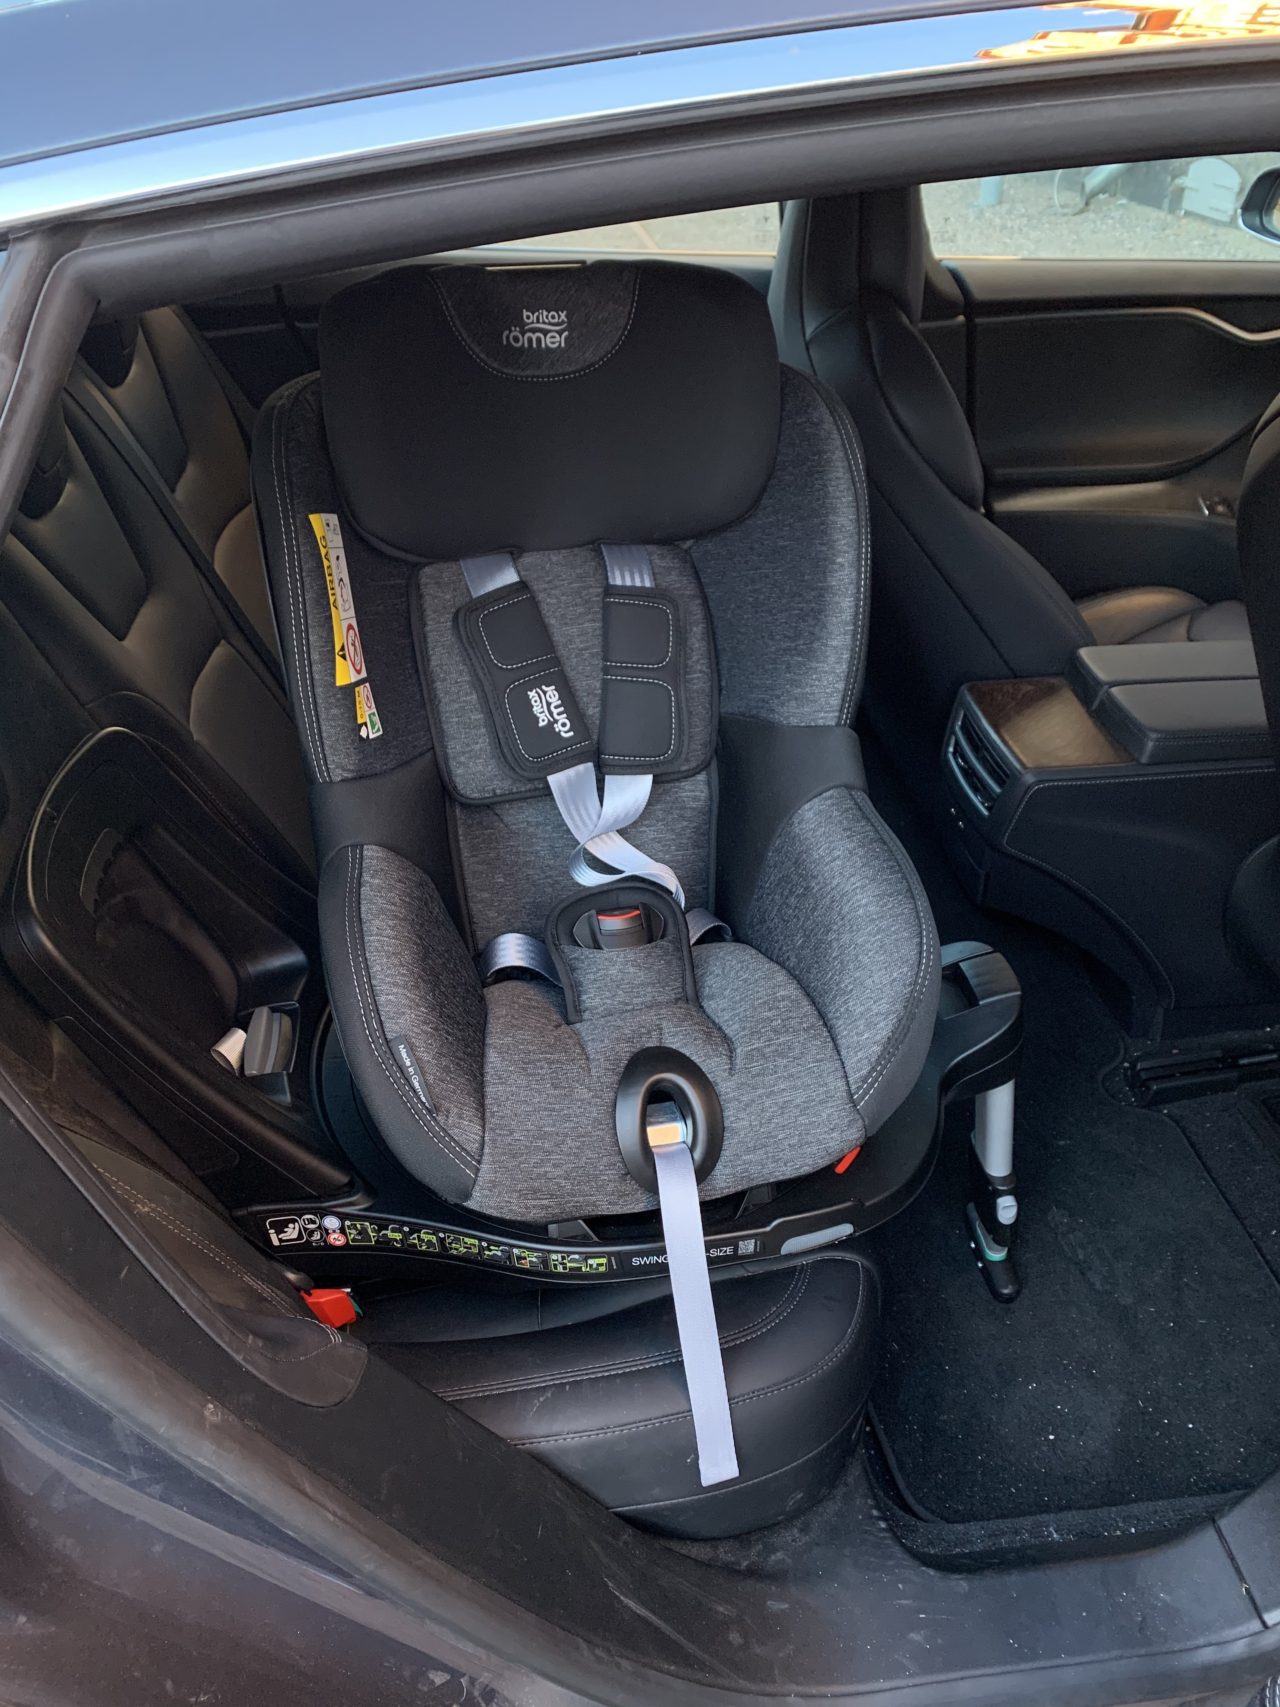 Child Car Seat In A Tesla Model S